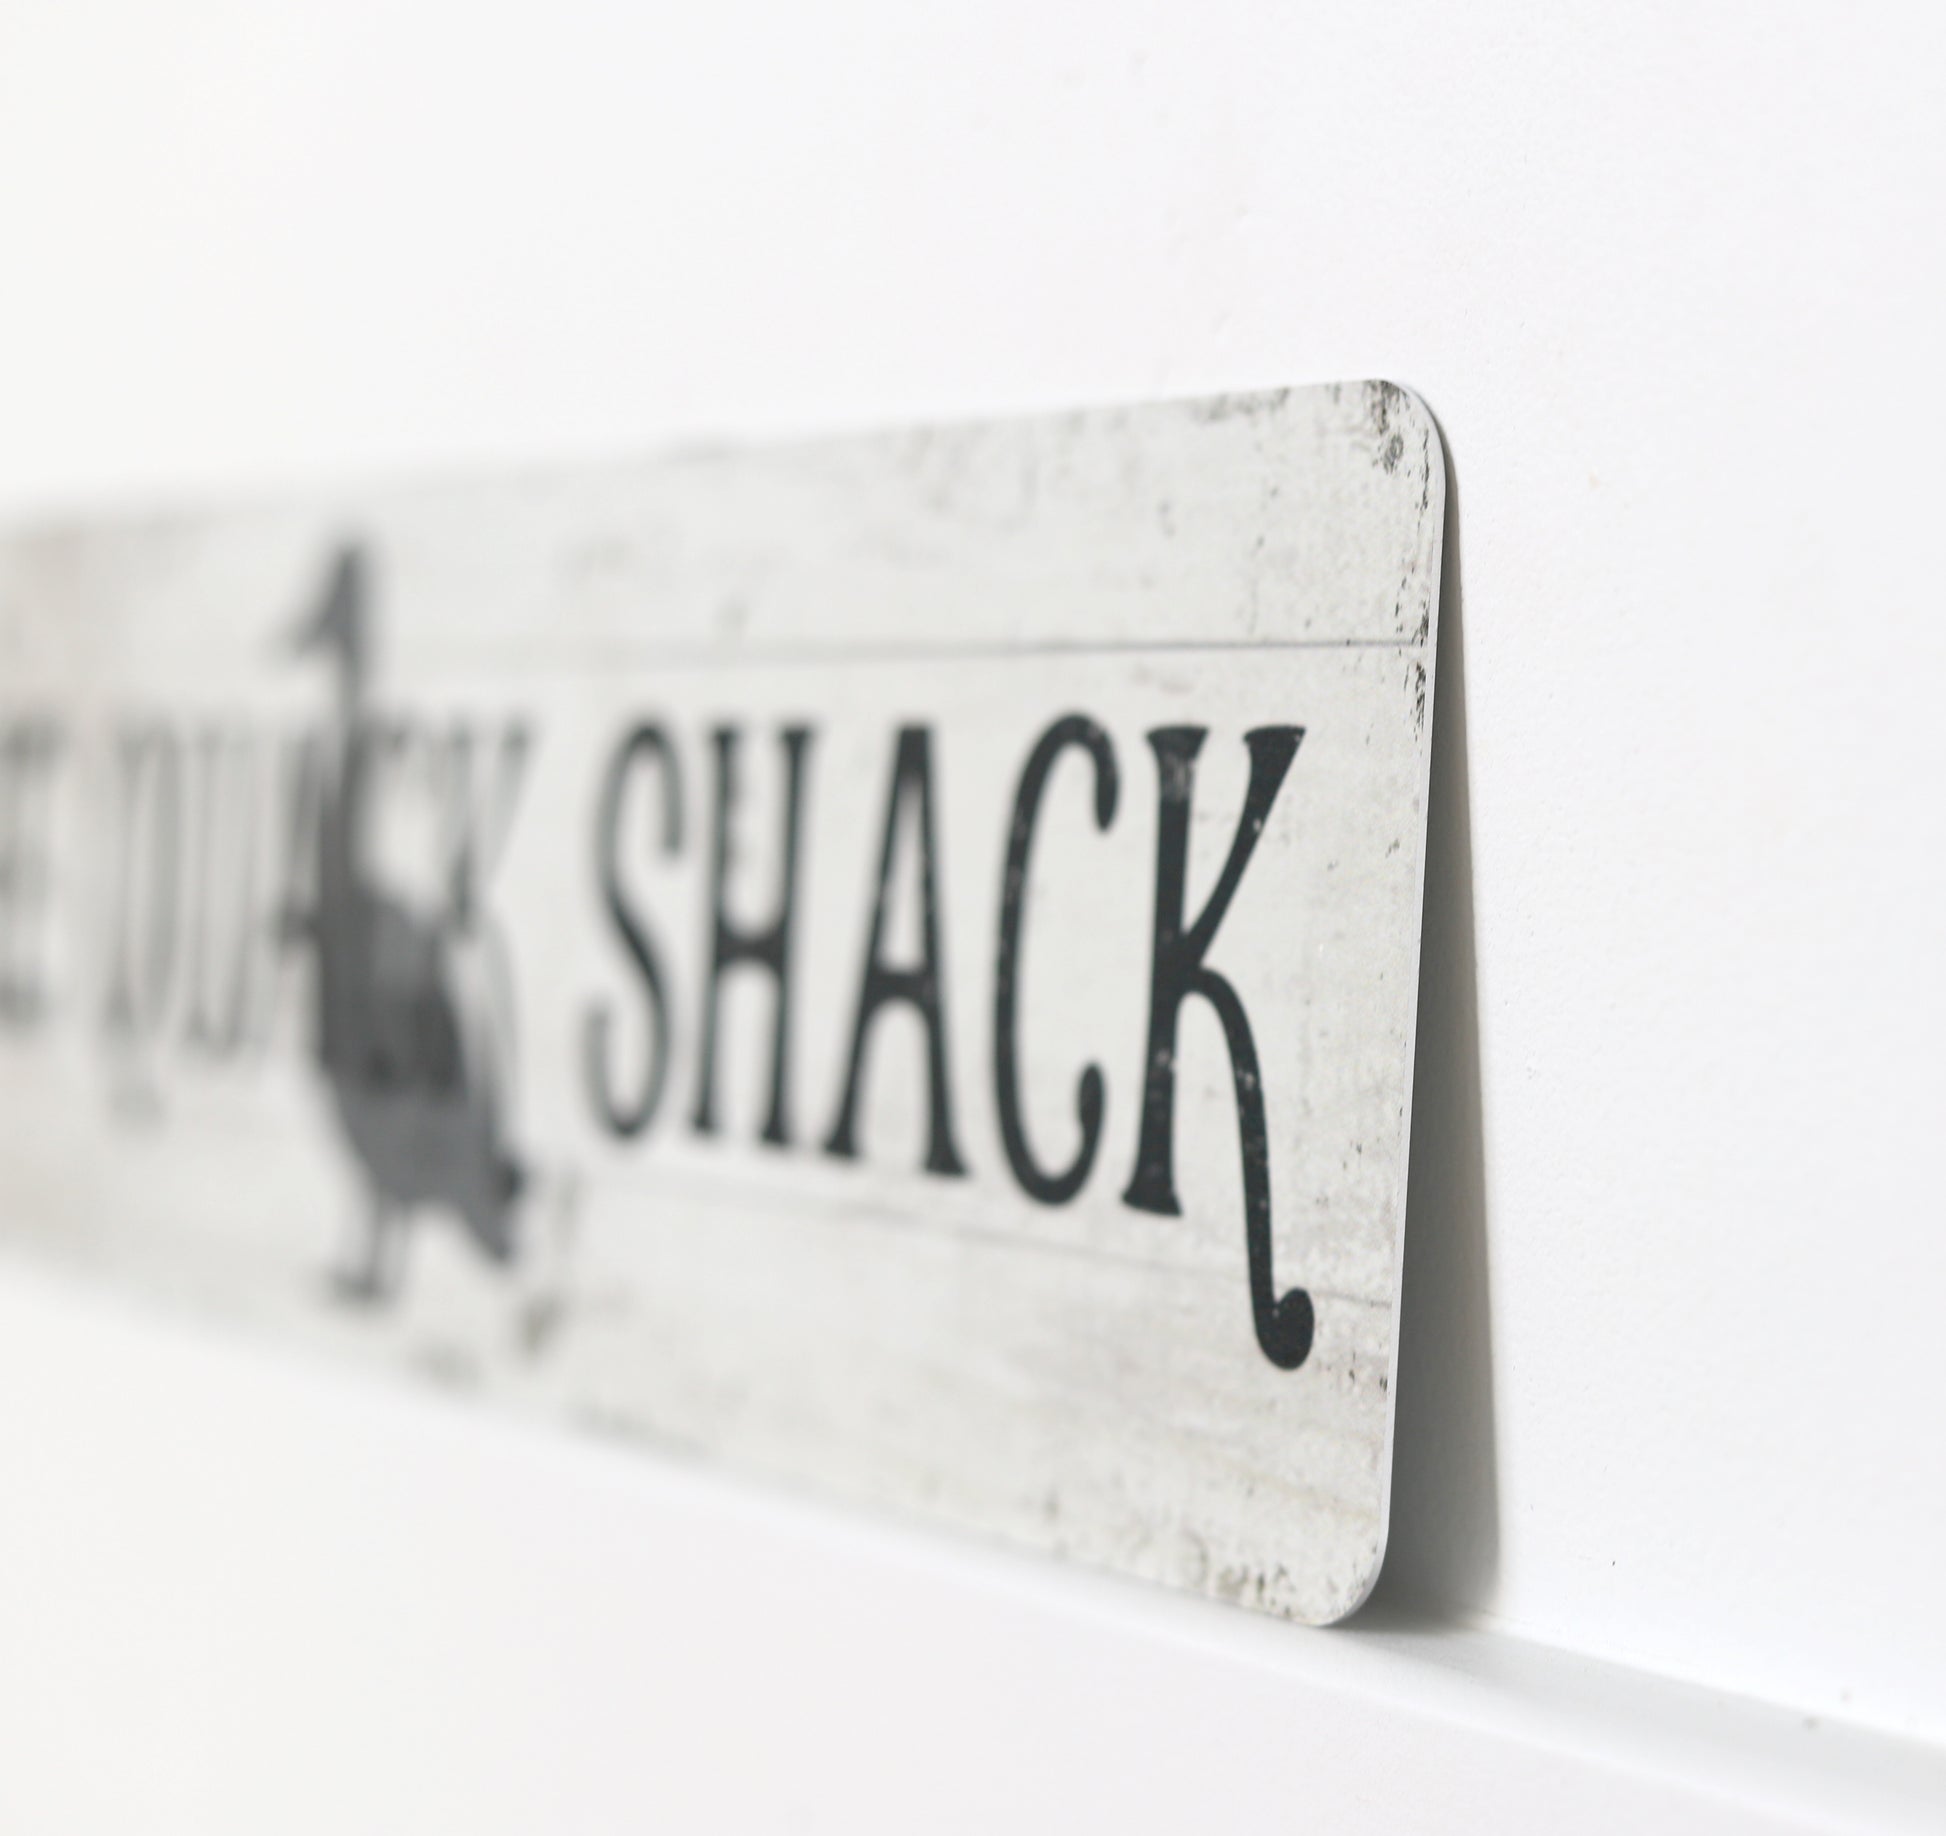 Rustic Metal "Quack Shack" Sign - The Sign Shoppe 